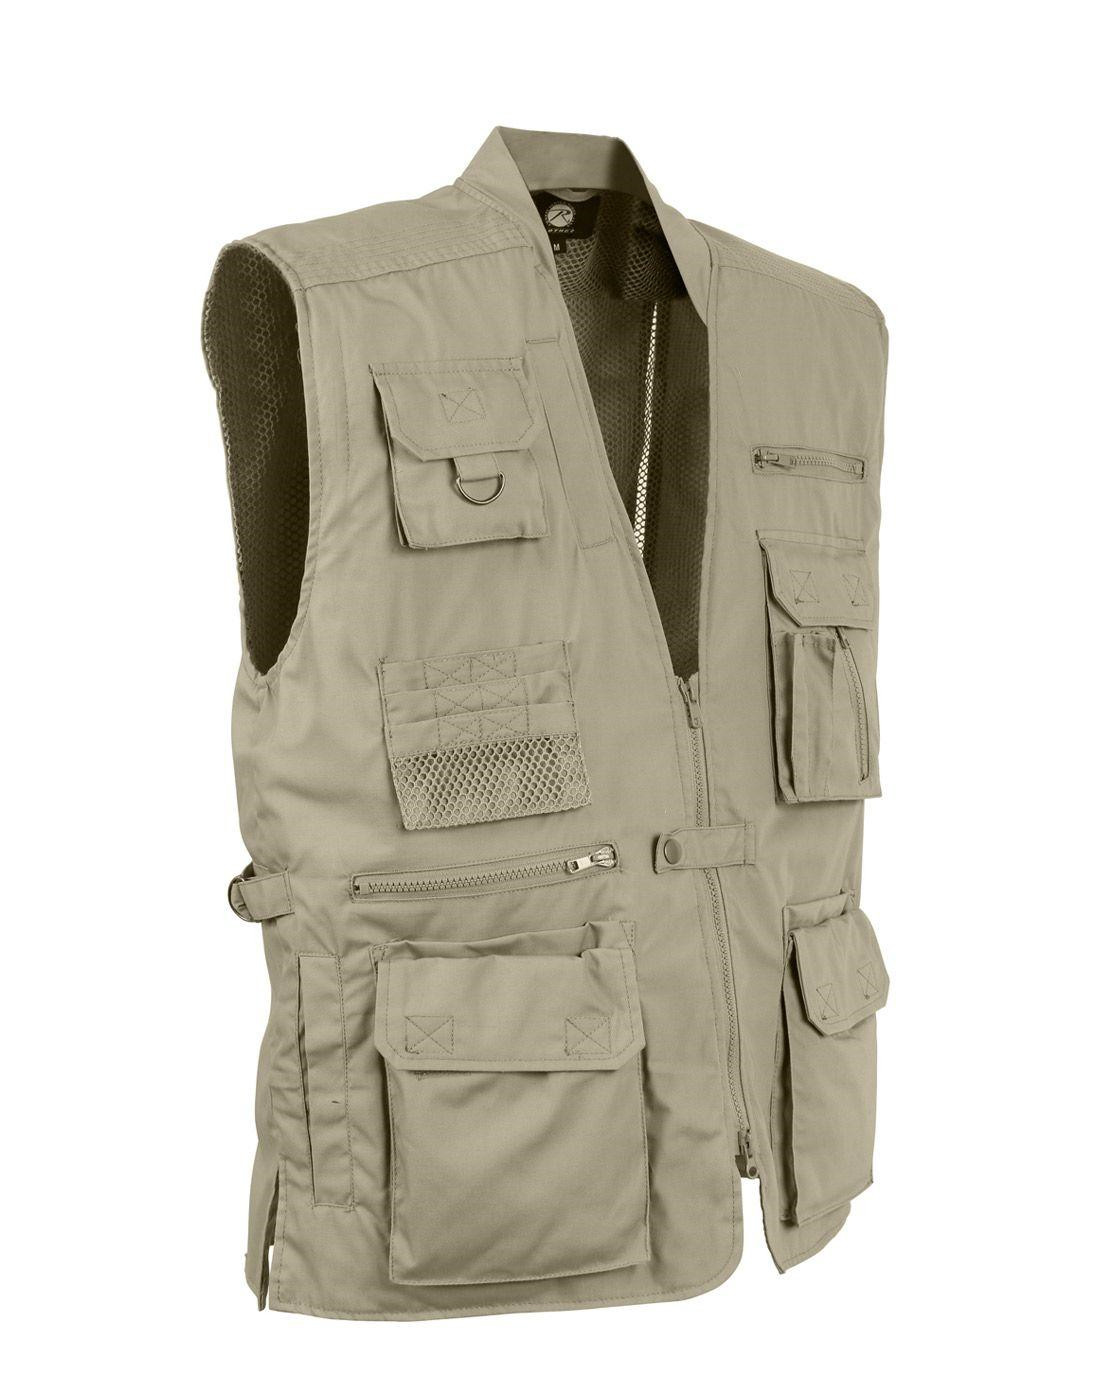 6: Rothco Low Profile Cargo Vest (Khaki, 4XL)